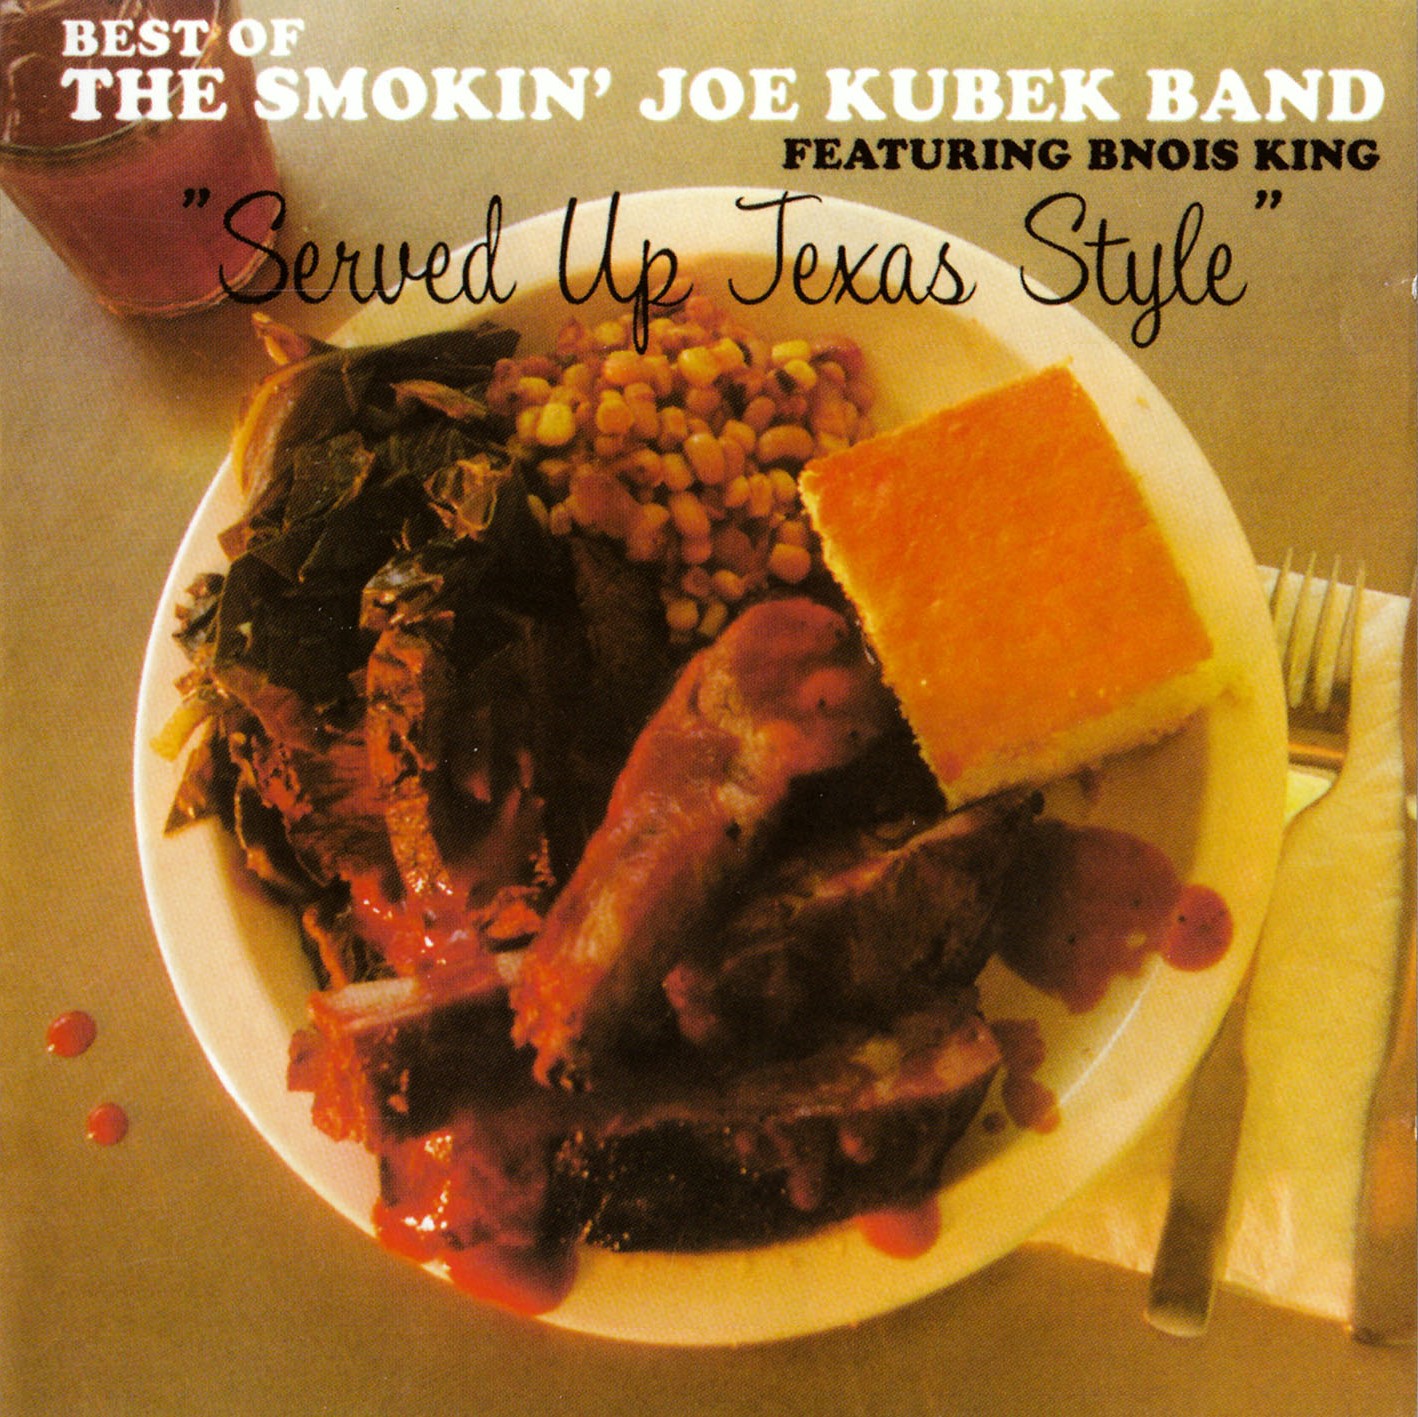 Smokin' Joe Kubek Band - Served Up Texas Style (2005) (Blues Rock) (flac)